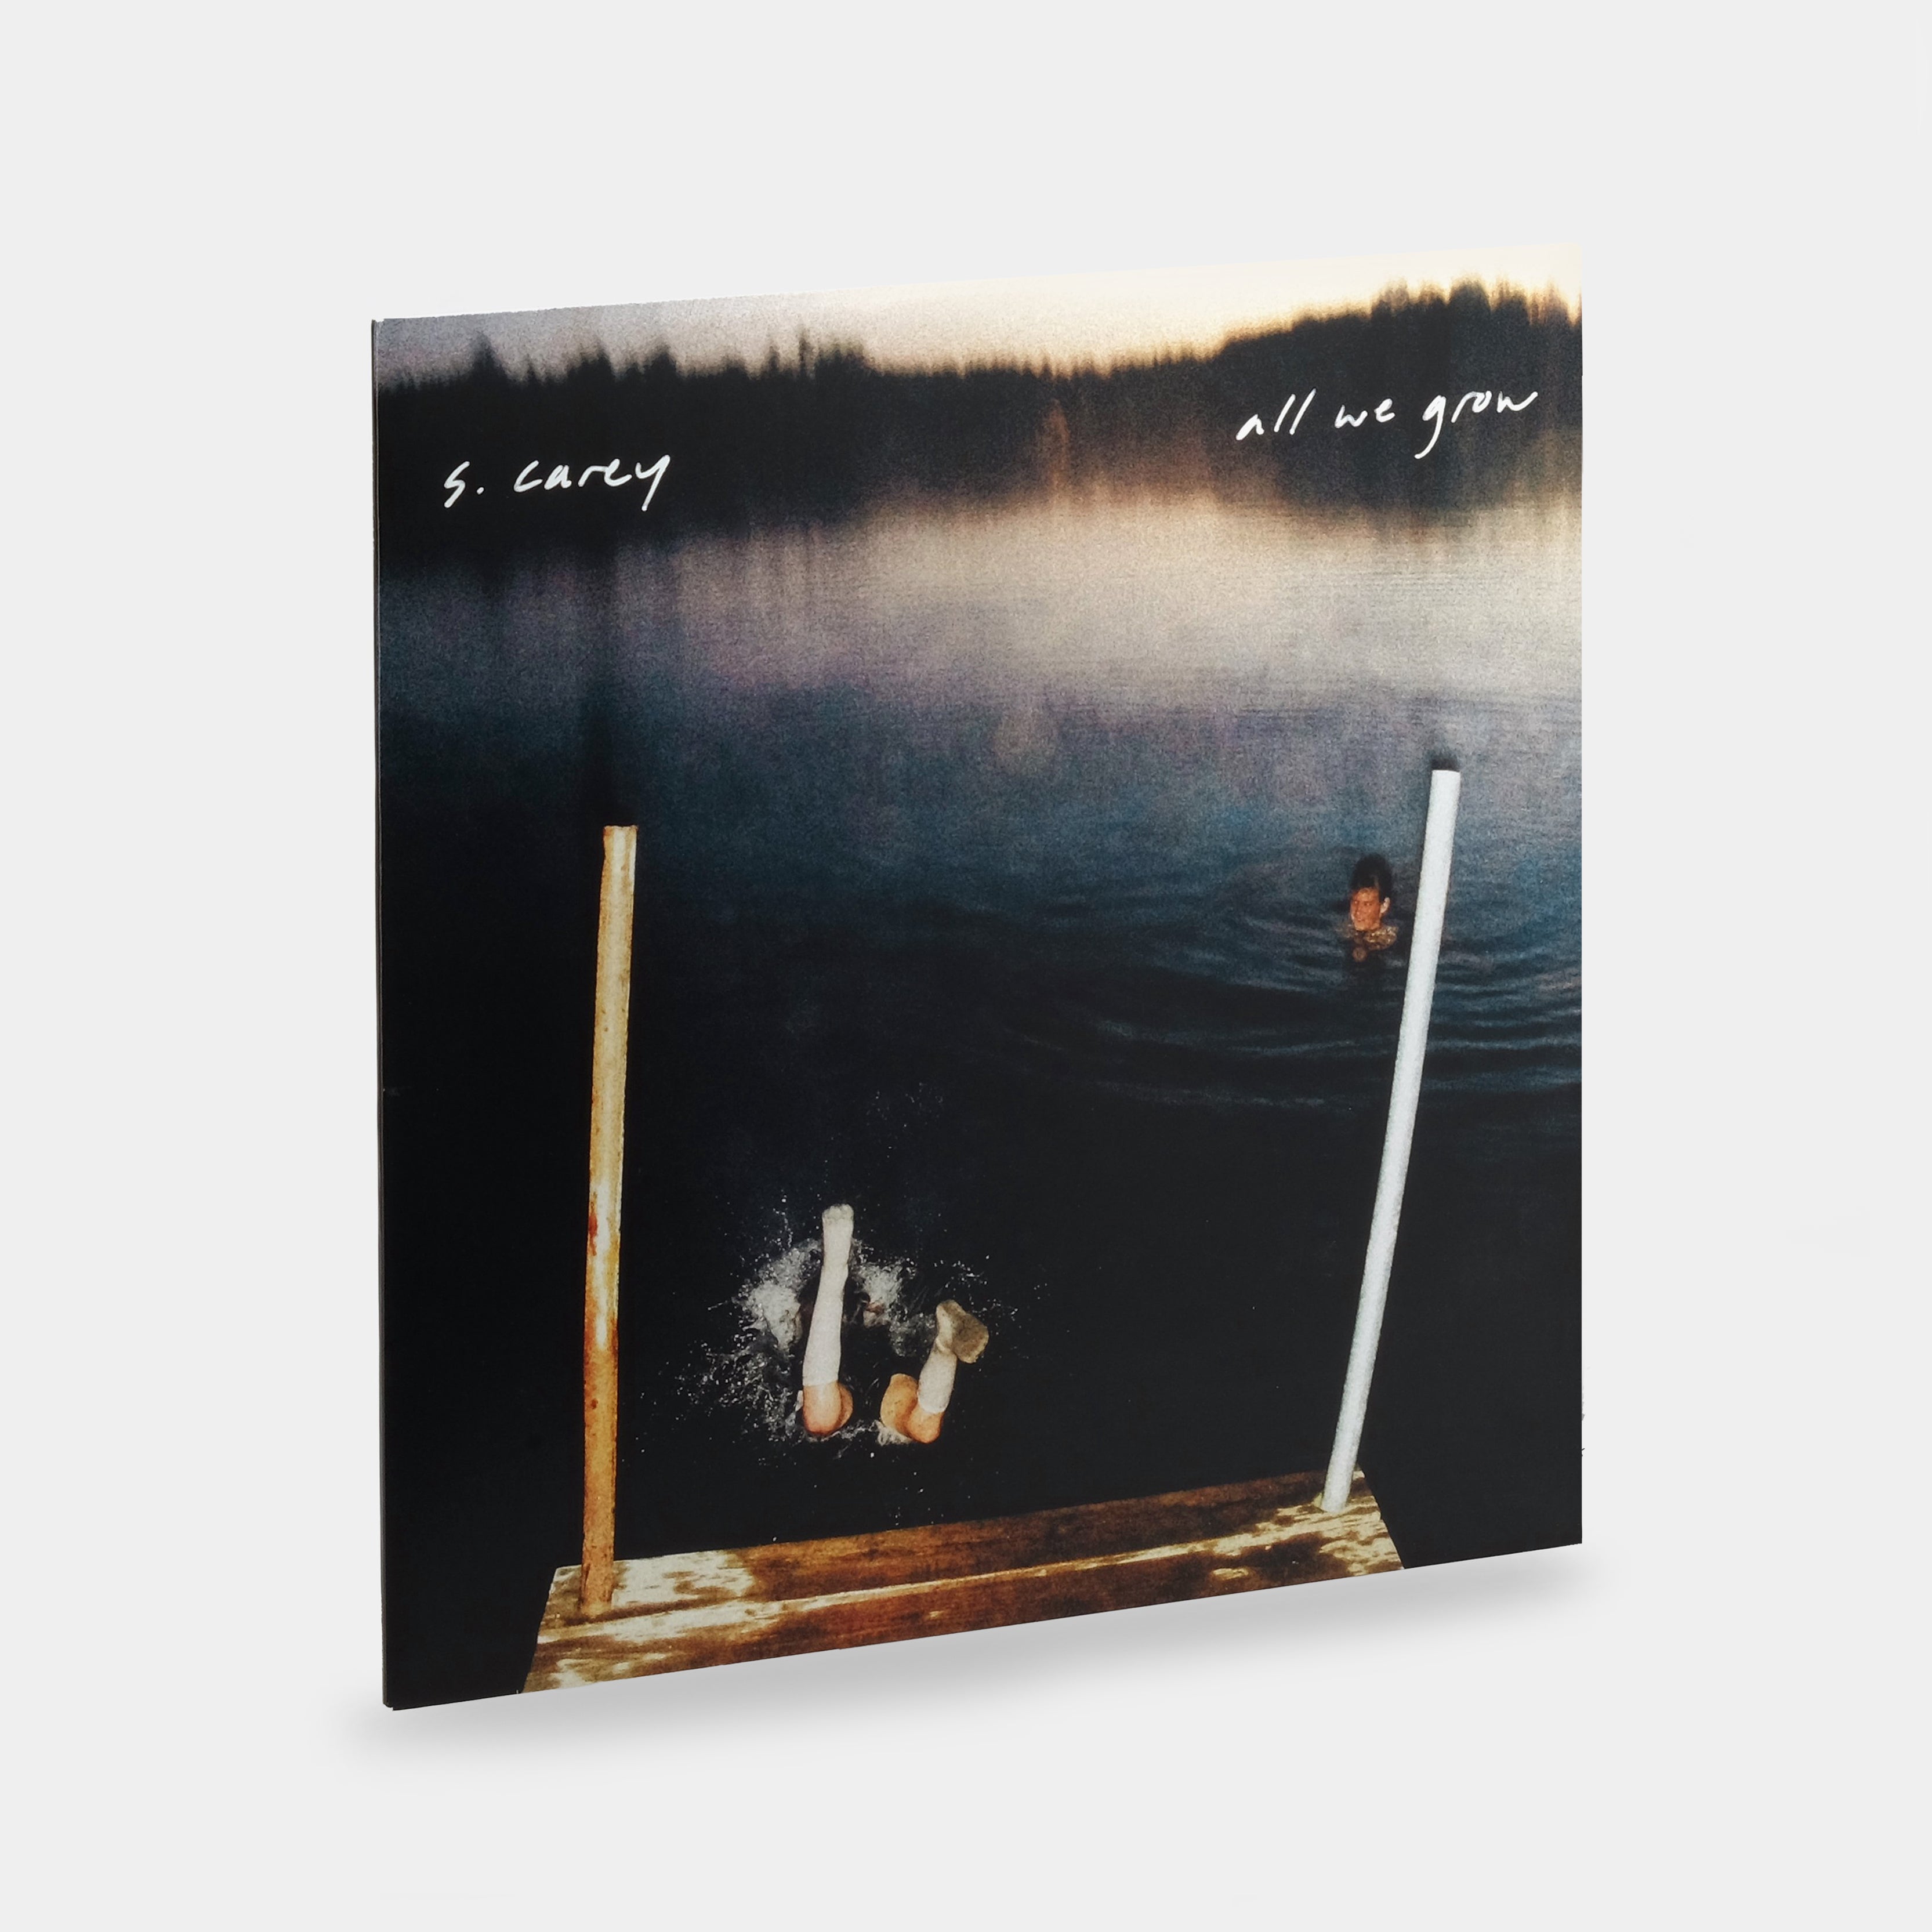 S. Carey - All We Grow LP Vinyl Record